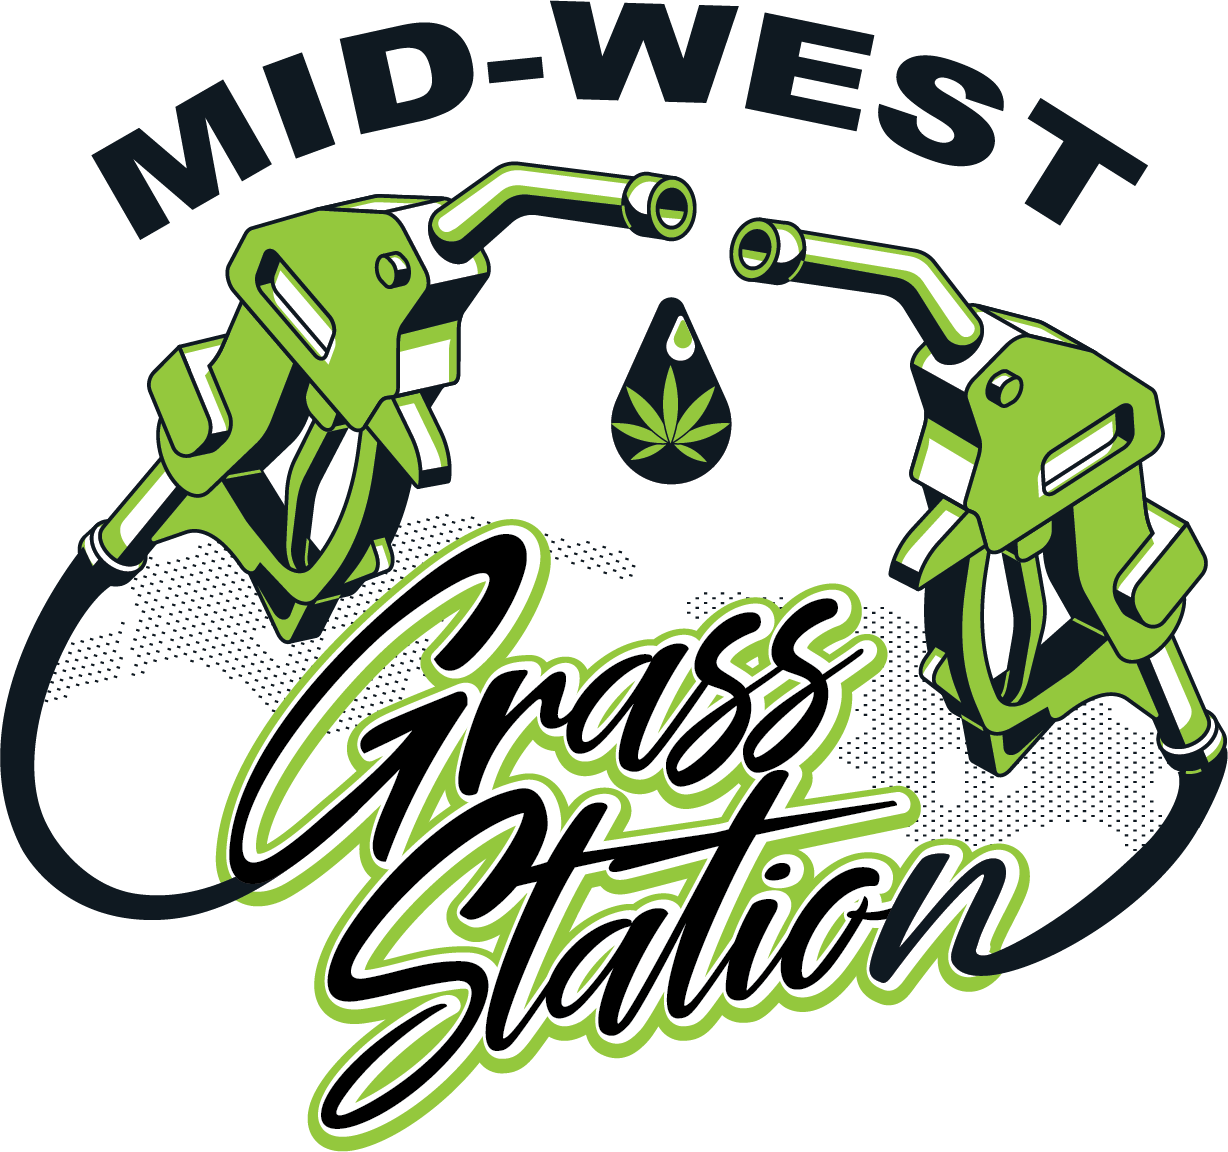 Mid-West Grass Station LLC logo